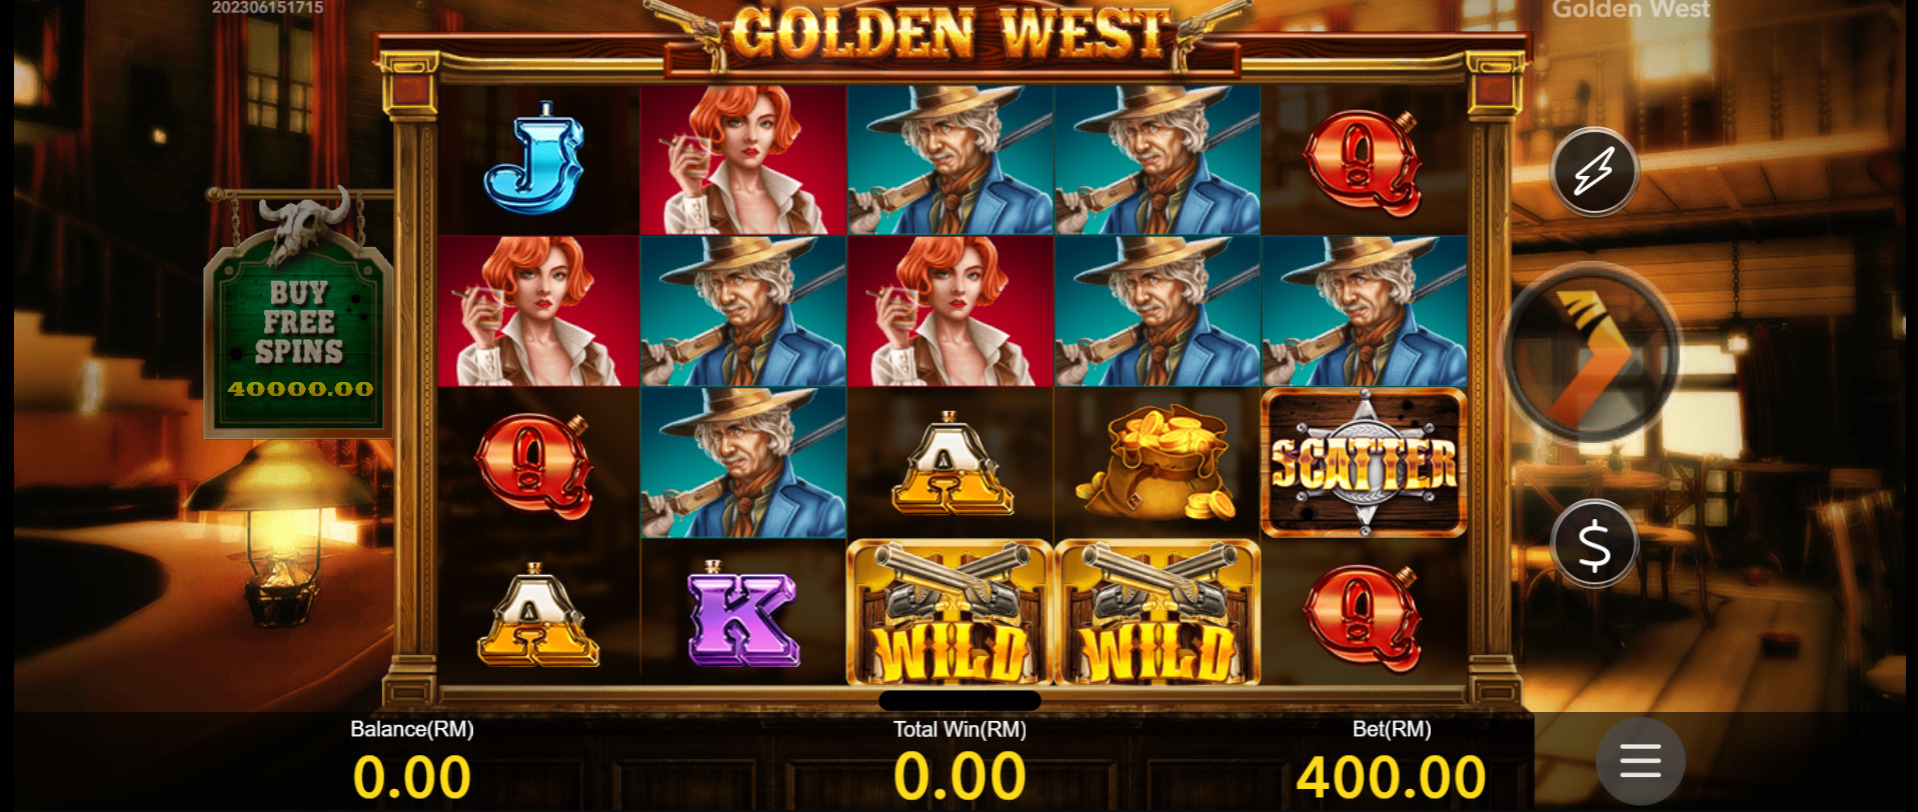 Golden West - Nextspin Slot